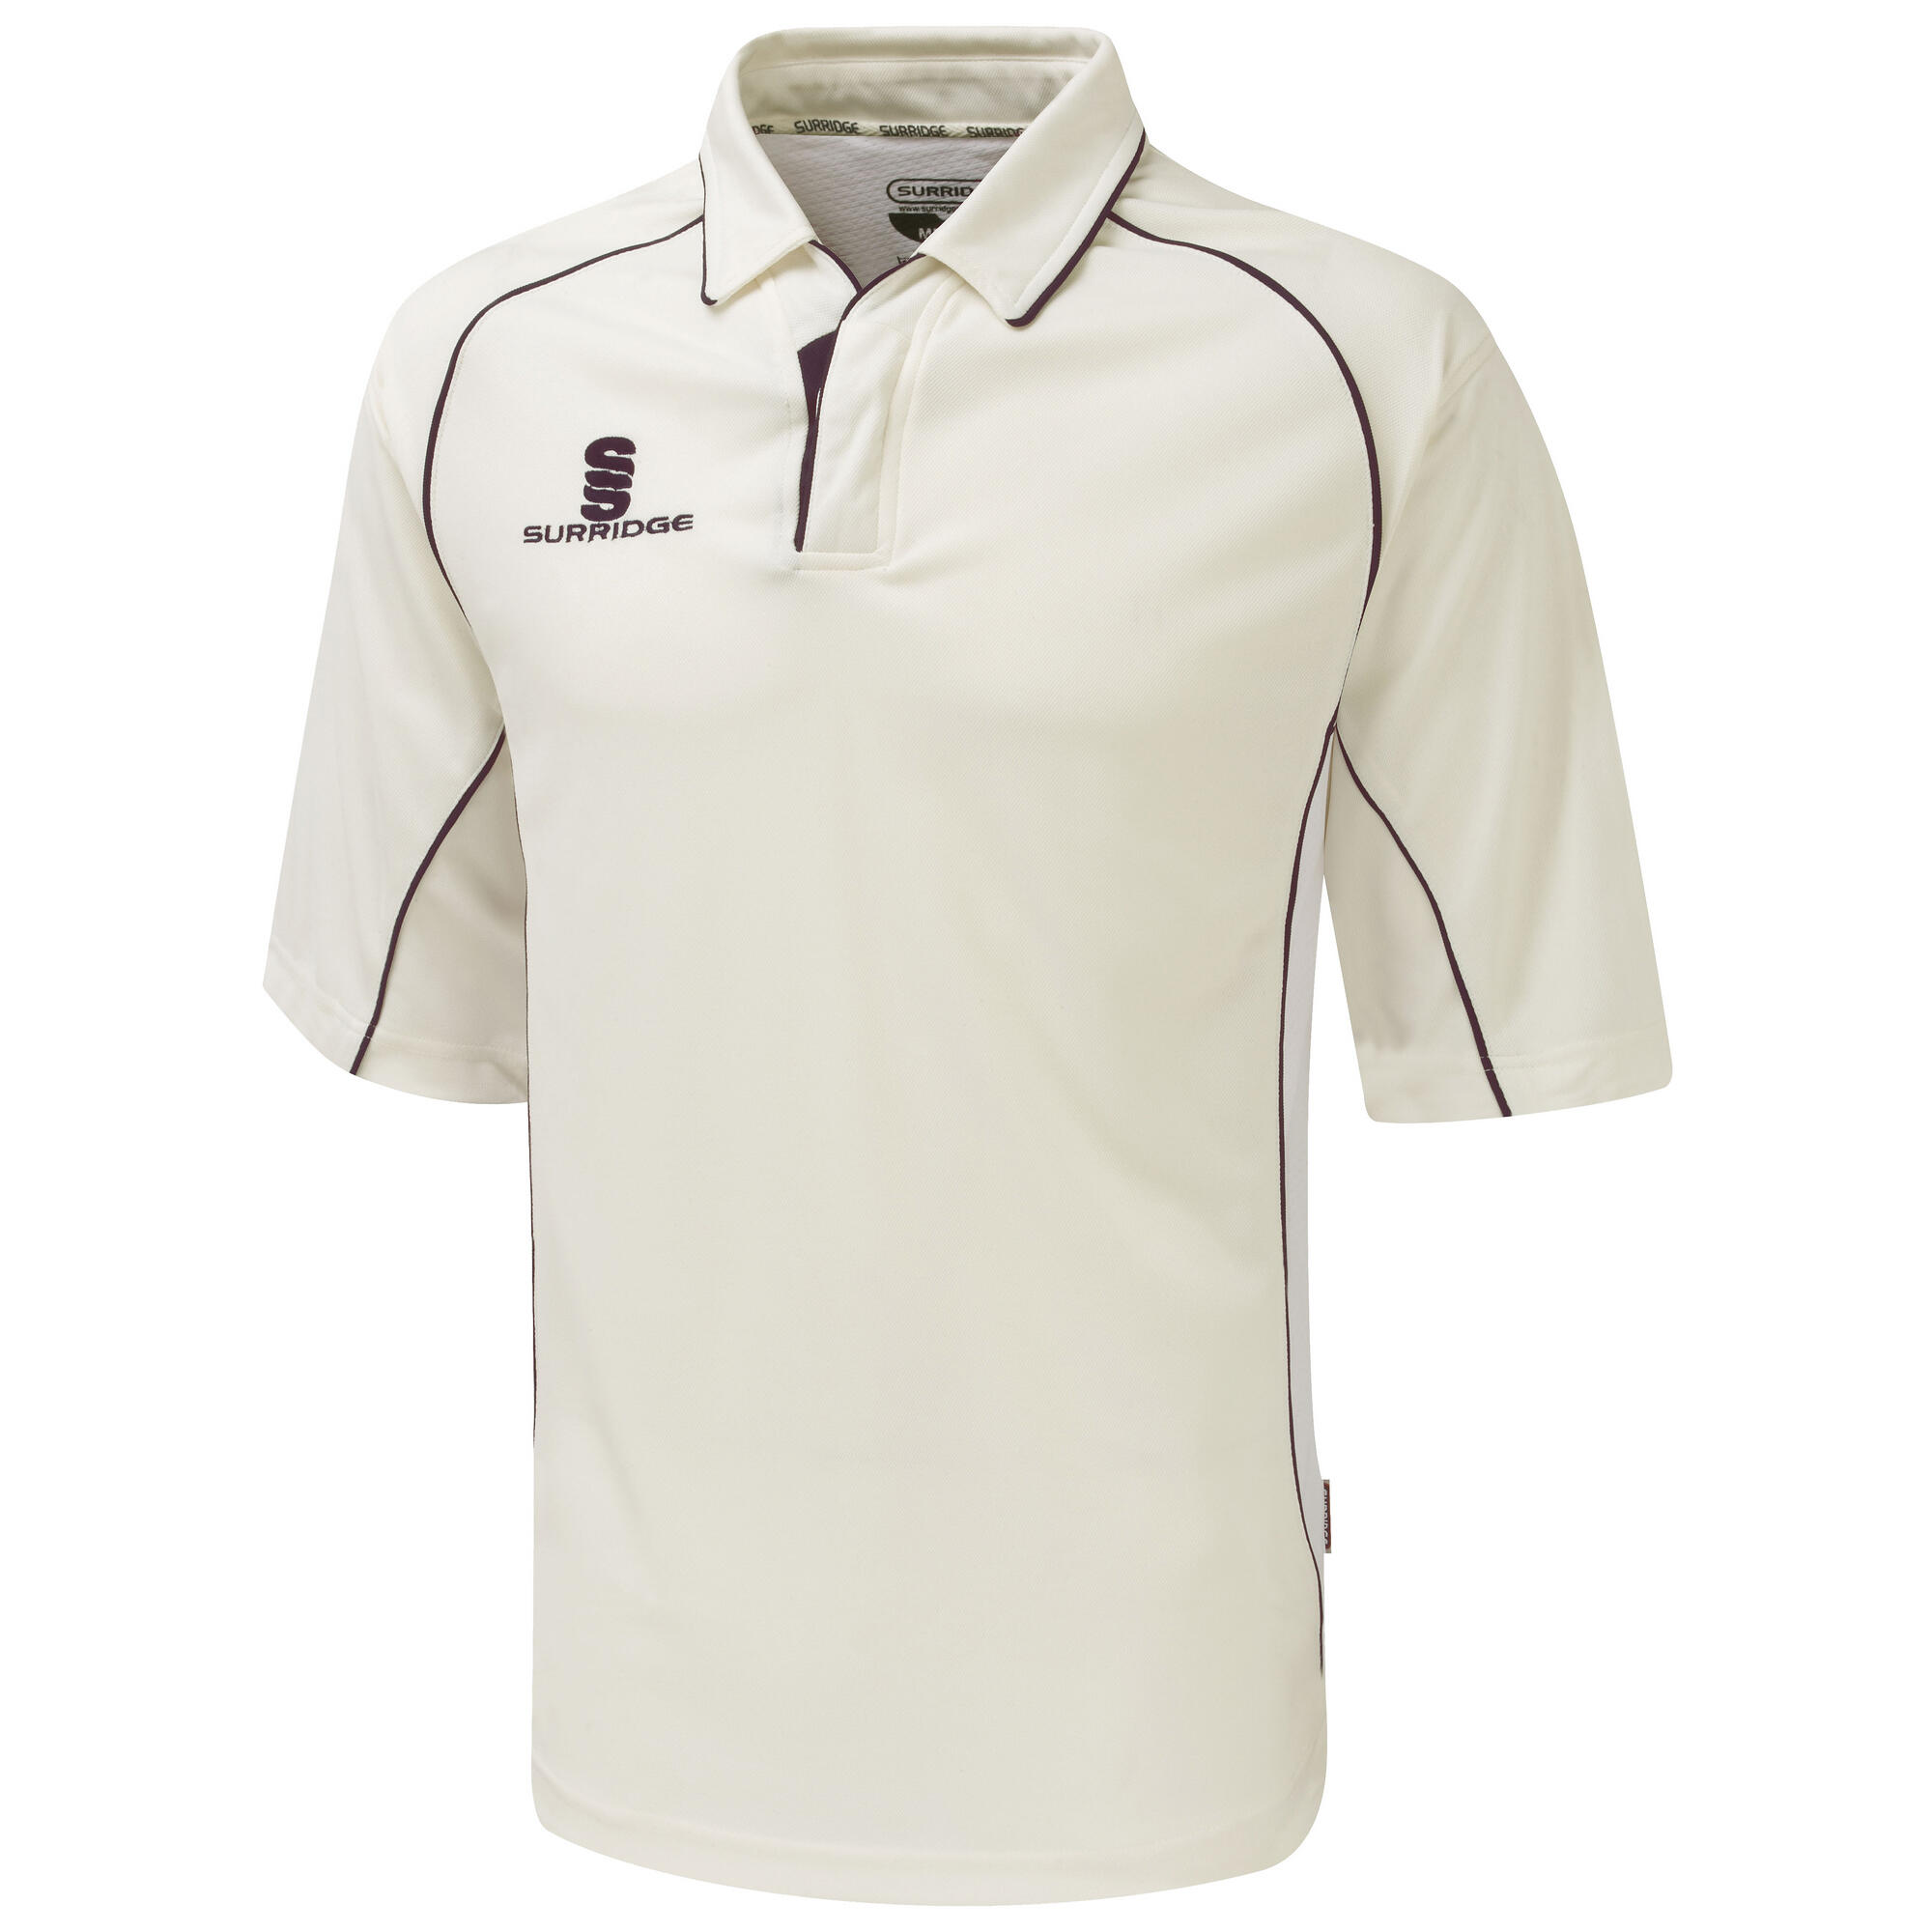 SURRIDGE Mens/Youth Premier Sports 3/4 Sleeve Polo Shirt (White/Maroon trim)